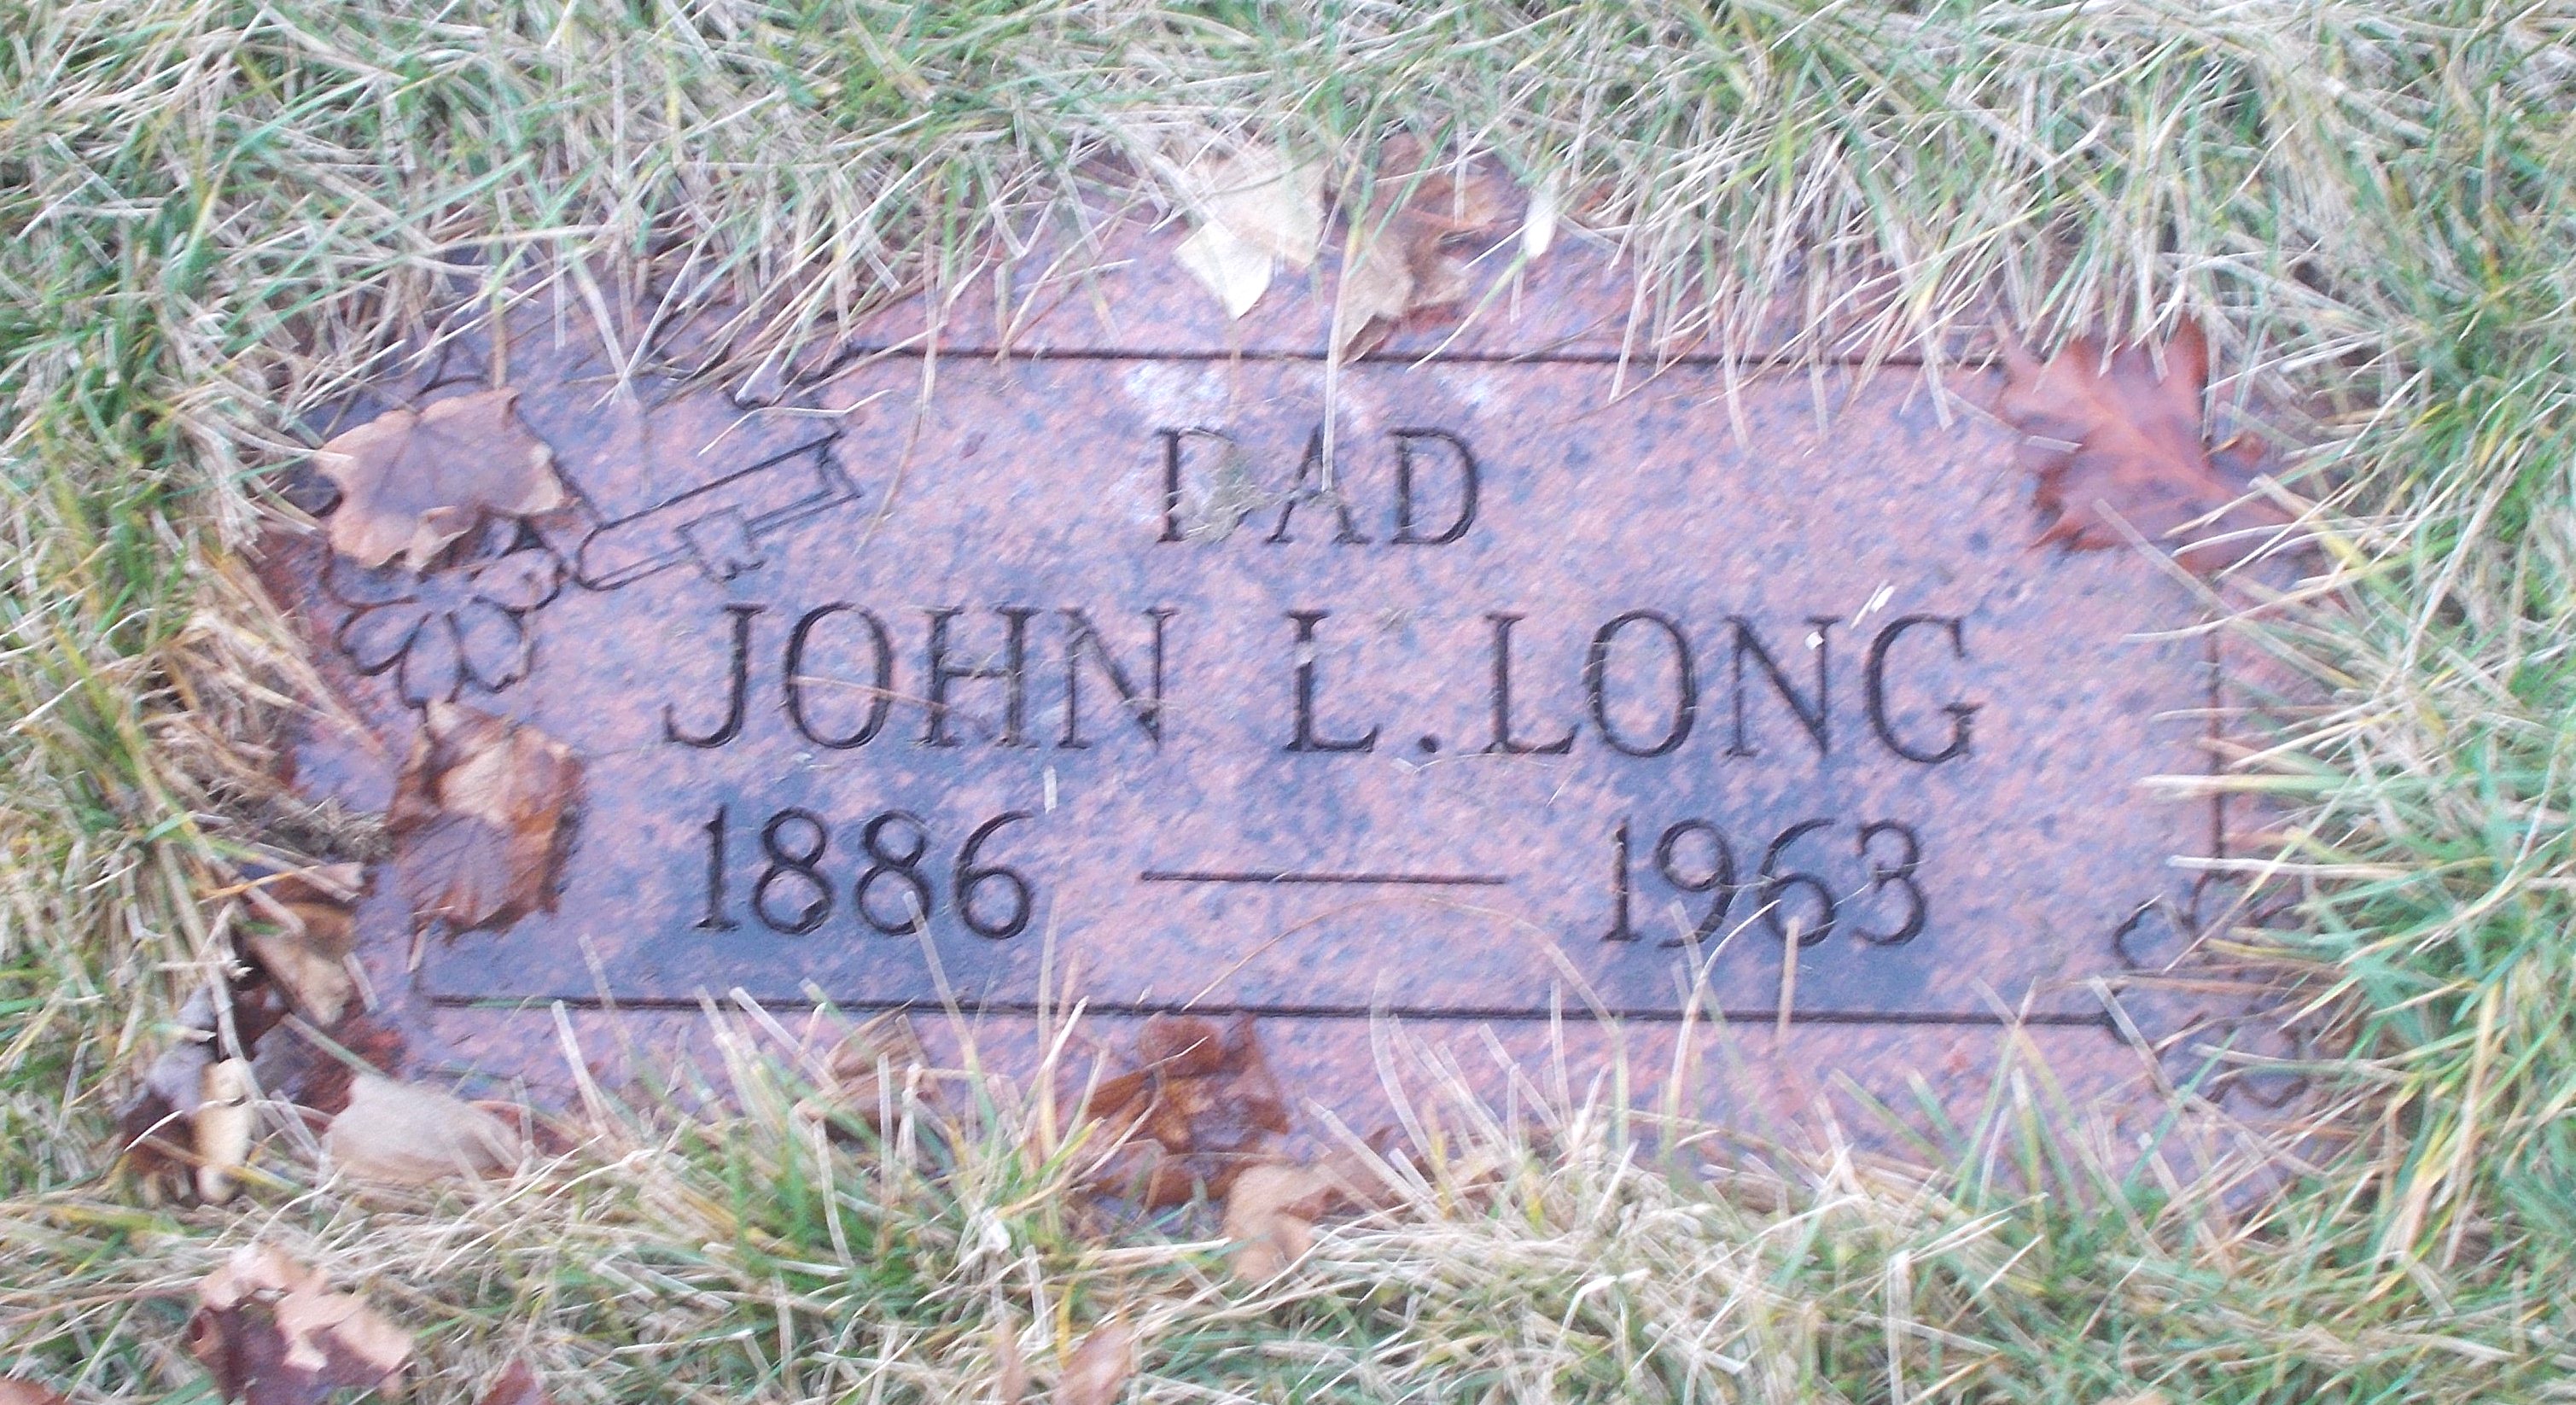 John L Long